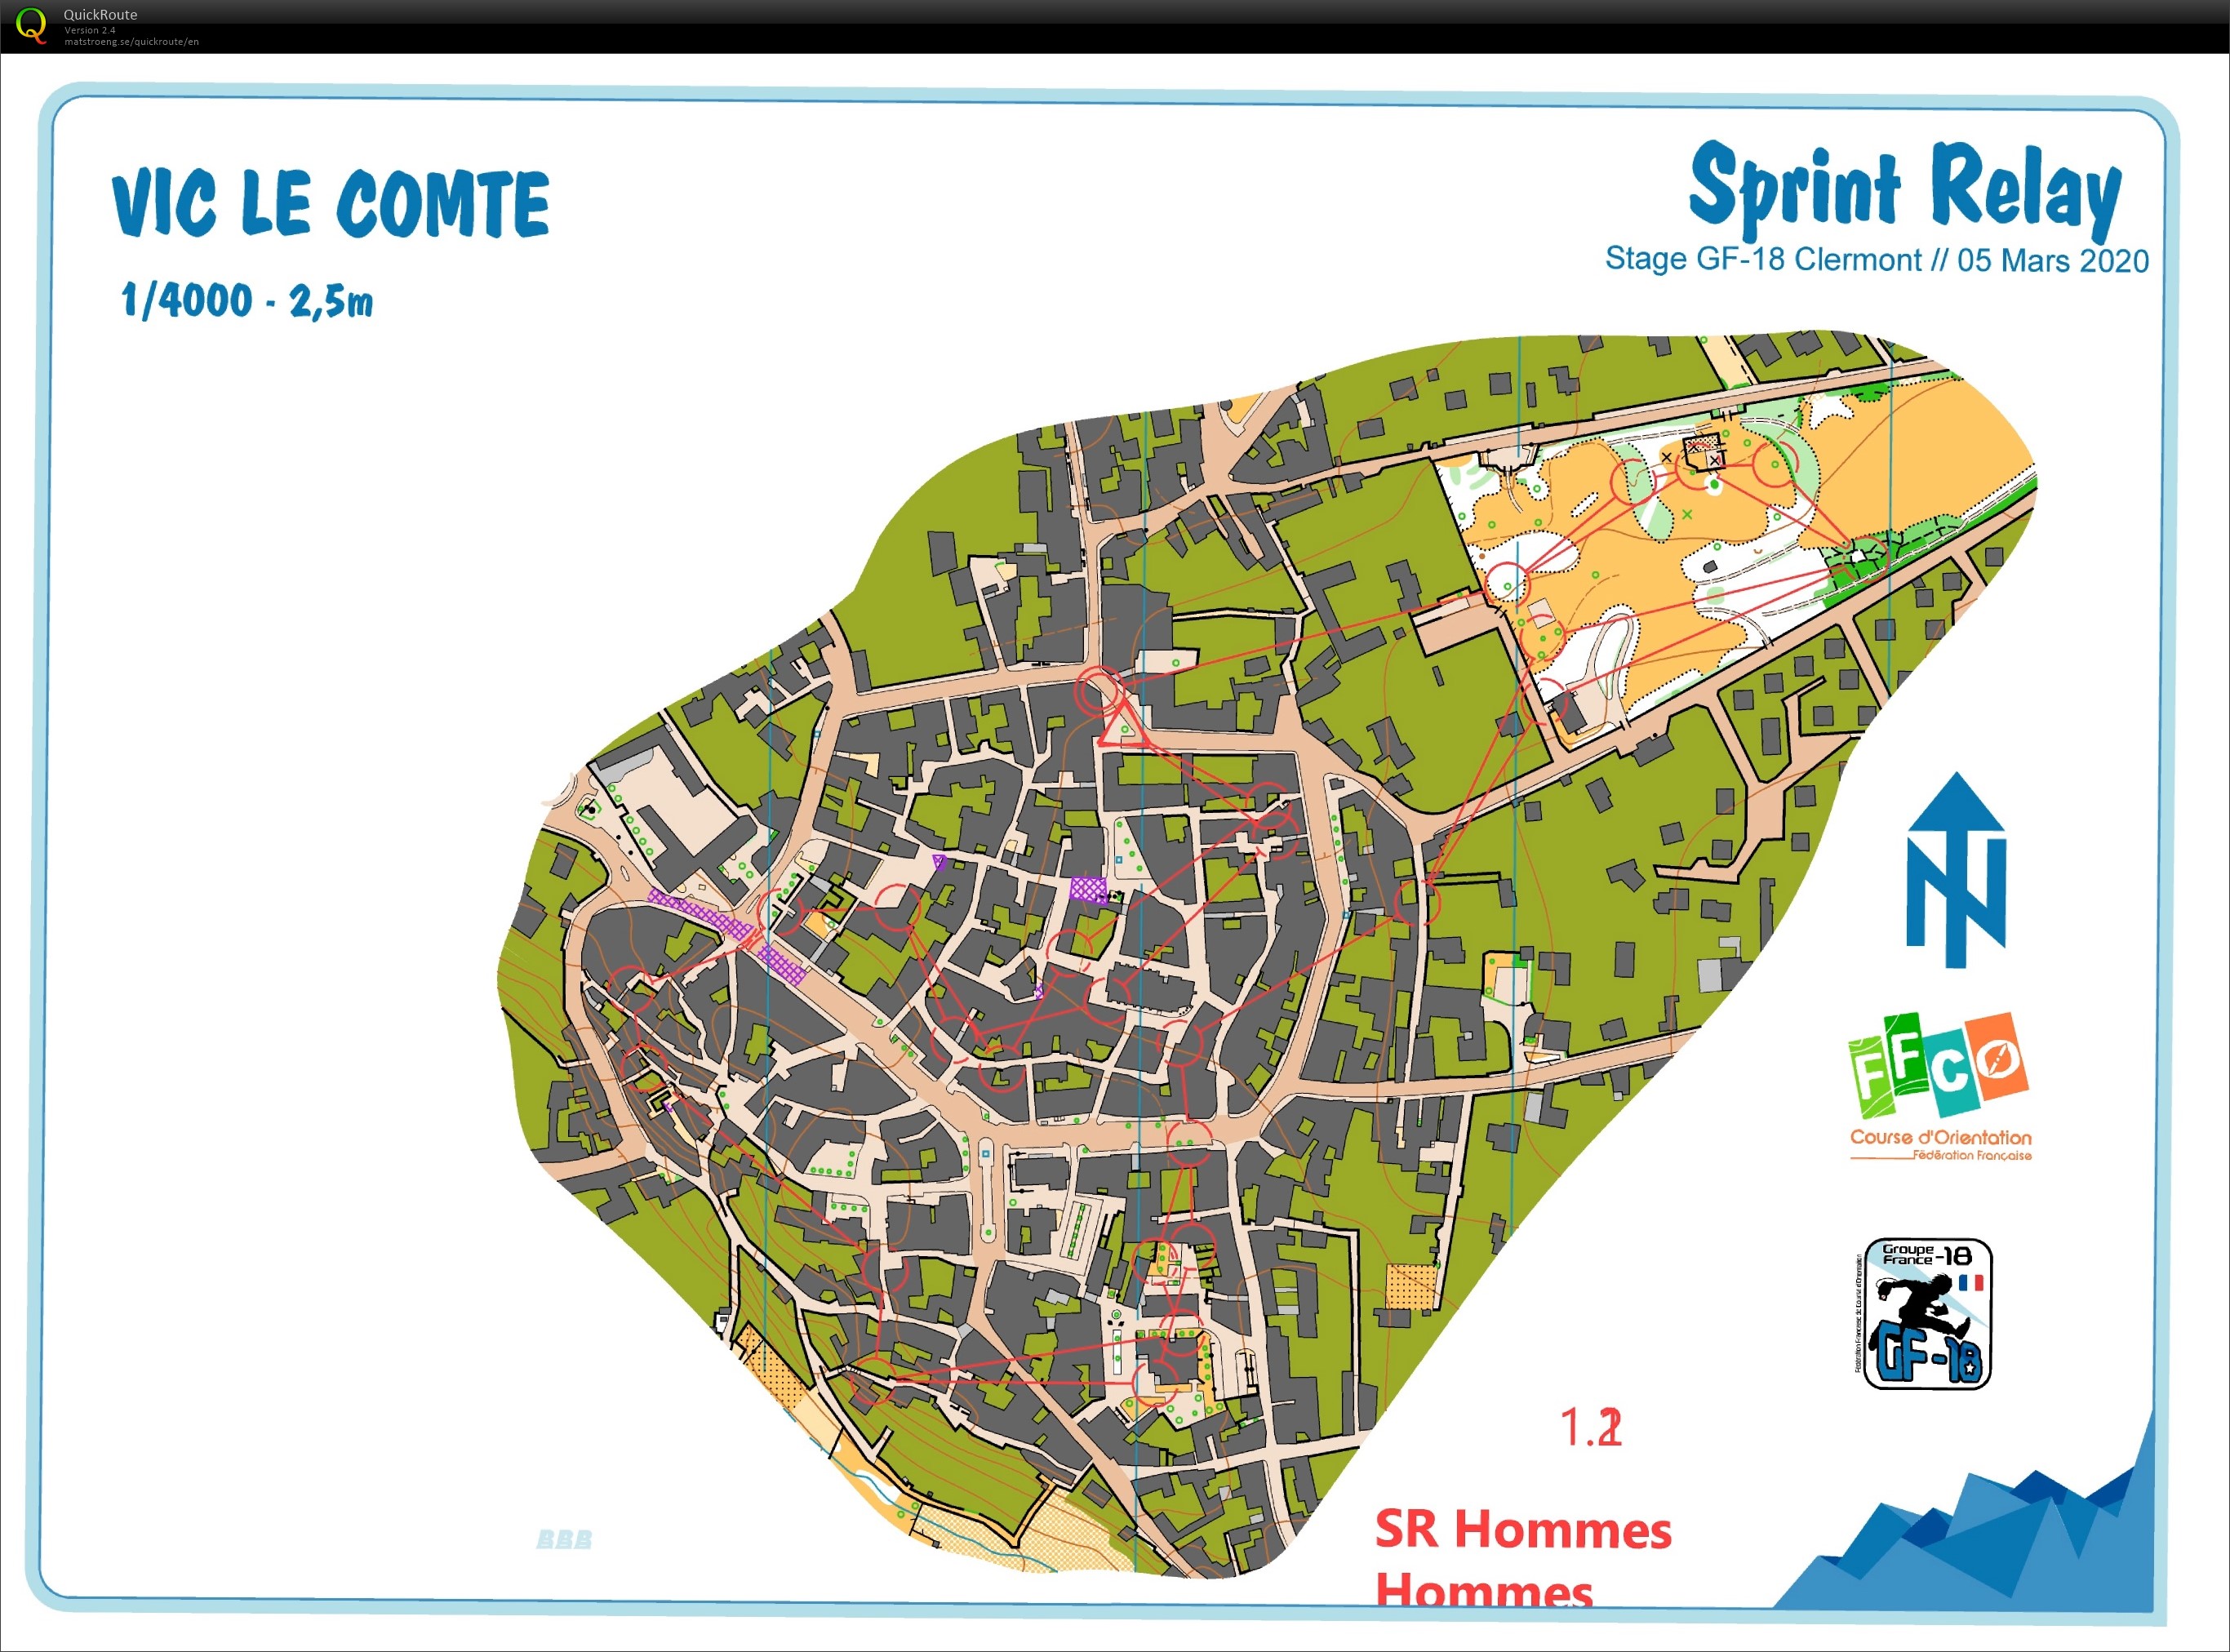 Stage gf-18 Clermont (8) Sprint Relais (05-03-2020)